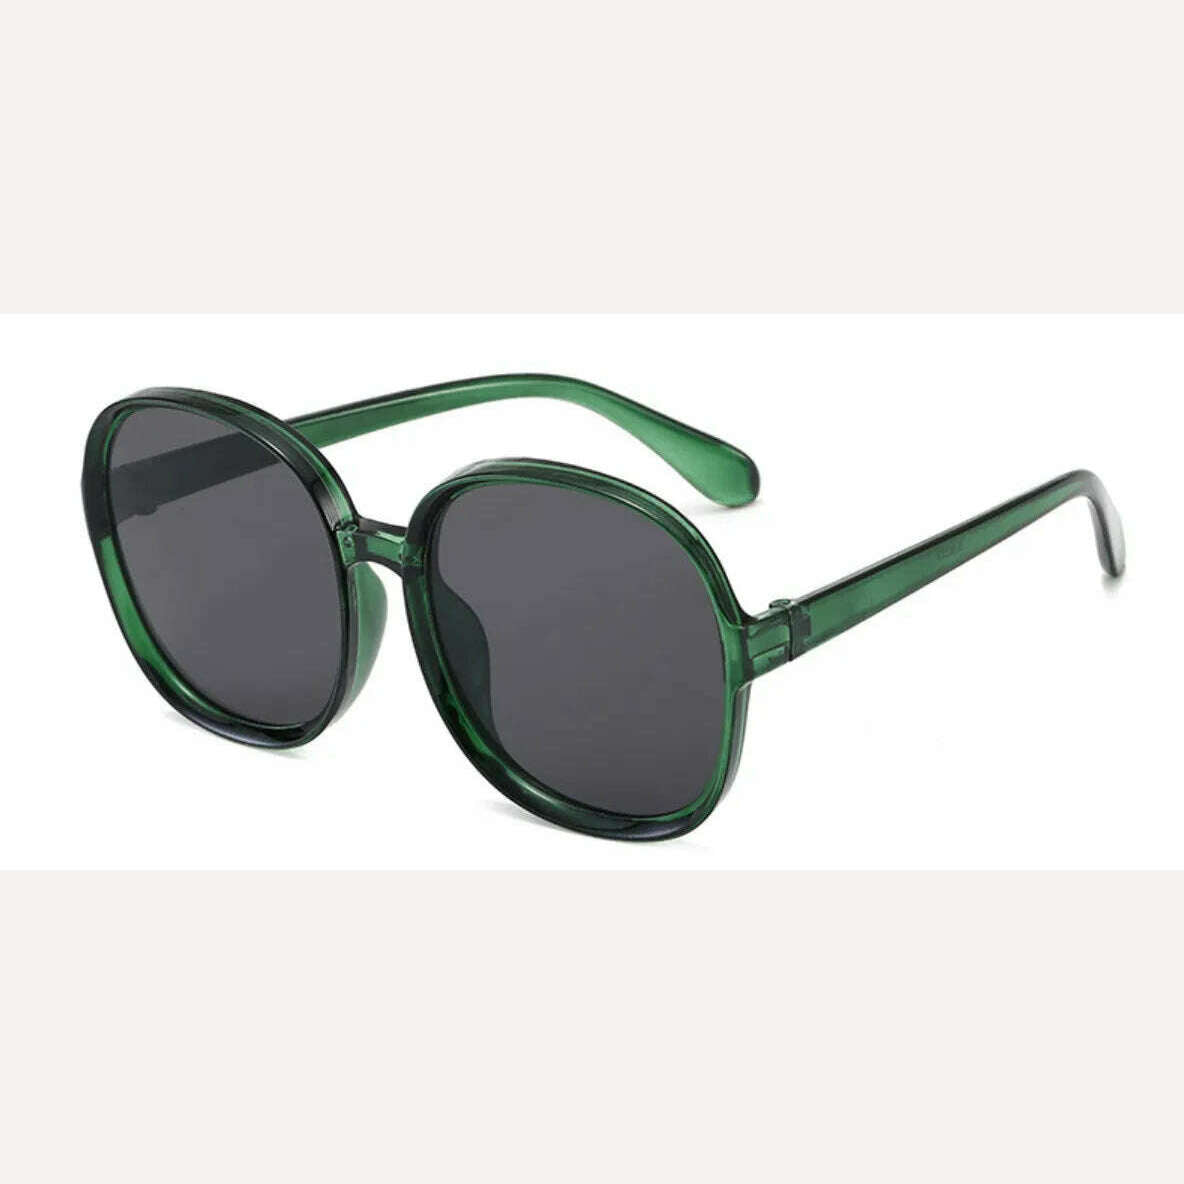 KIMLUD, 2021 Plastic Classic Vintage Woman Sunglasses Oversized Round Frame Luxury Brand Designer Female Glasses Big Shades Oculos, Green Gray, KIMLUD Women's Clothes